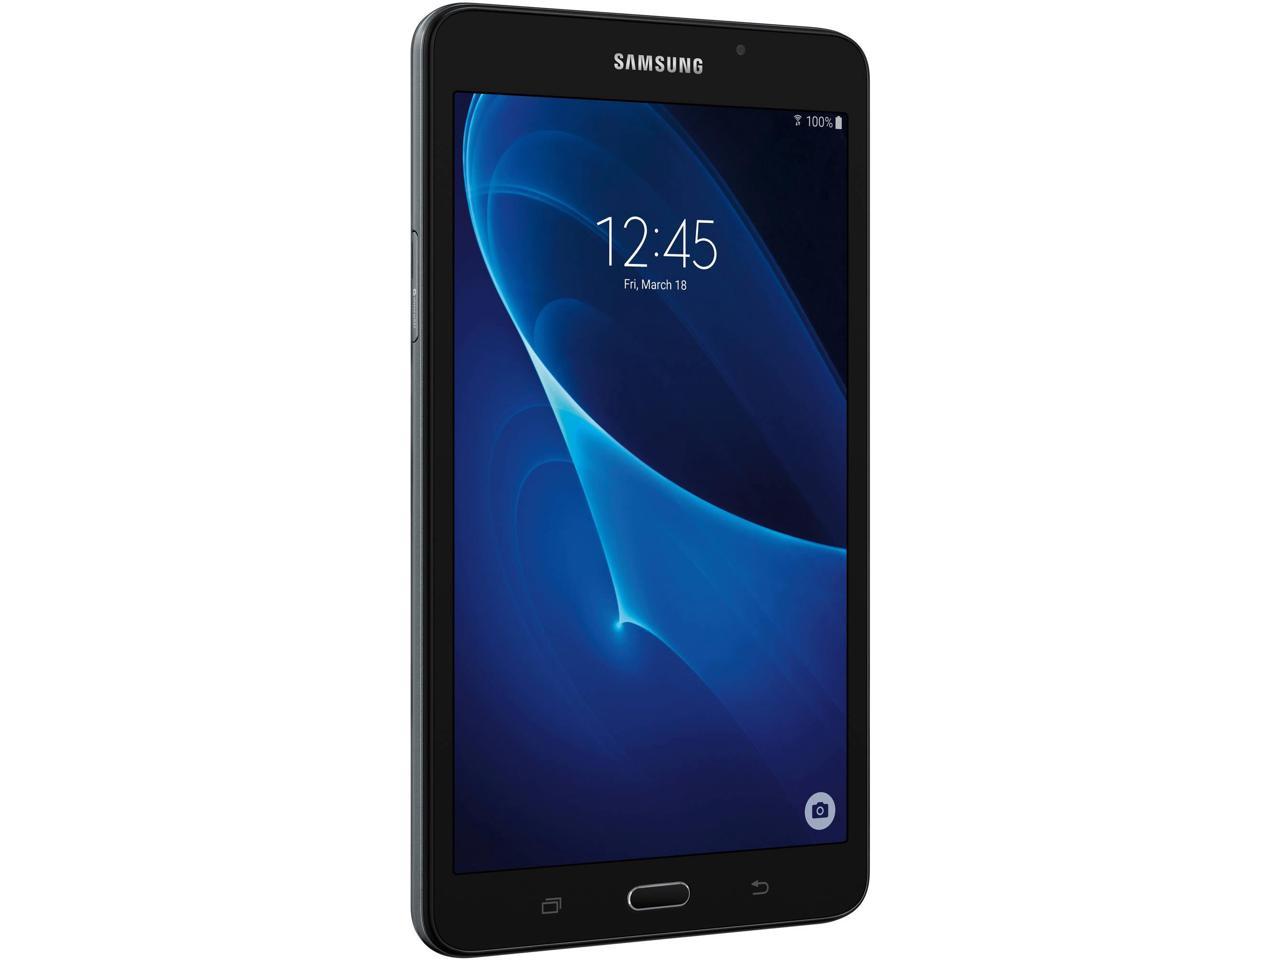 SAMSUNG Galaxy Tab A SM-T280NZKAXAR Quad Core Processor 1.30 GHz 1.5 GB Memory 8 GB Flash Storage 7.0" 1280 x 800 Tablet Android 5.1 (Lollipop) Black